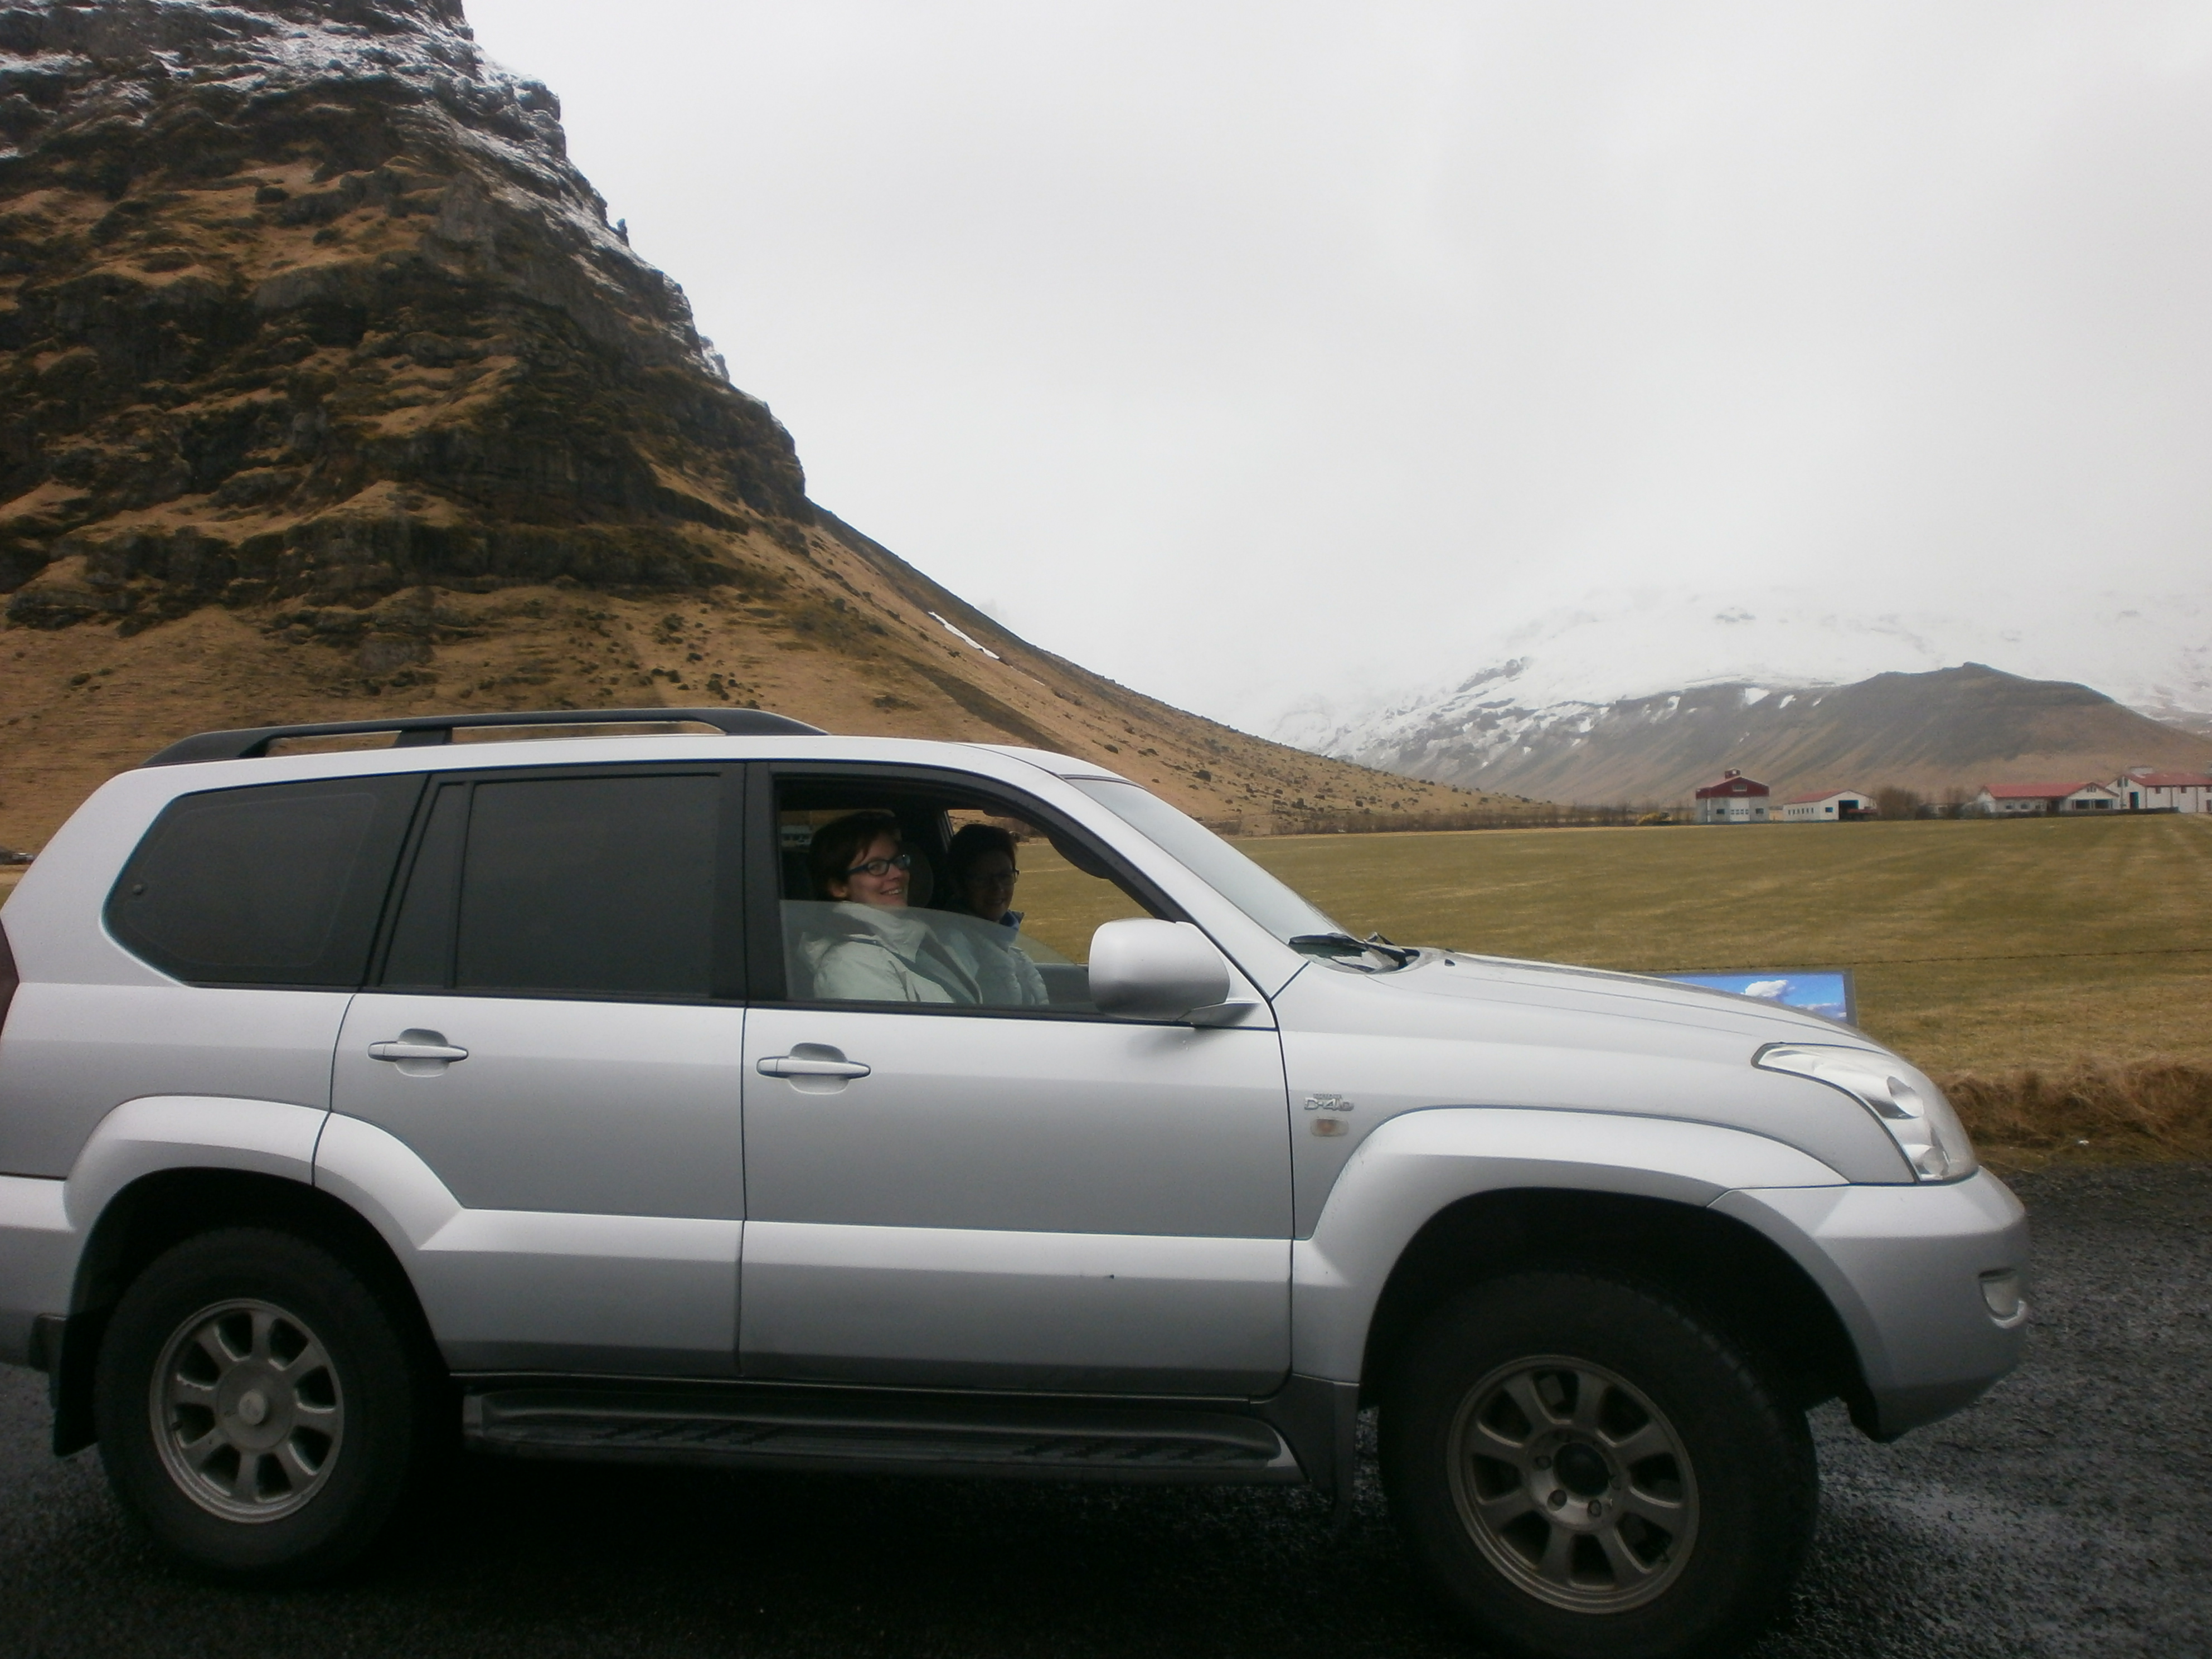 Free rental car in Iceland